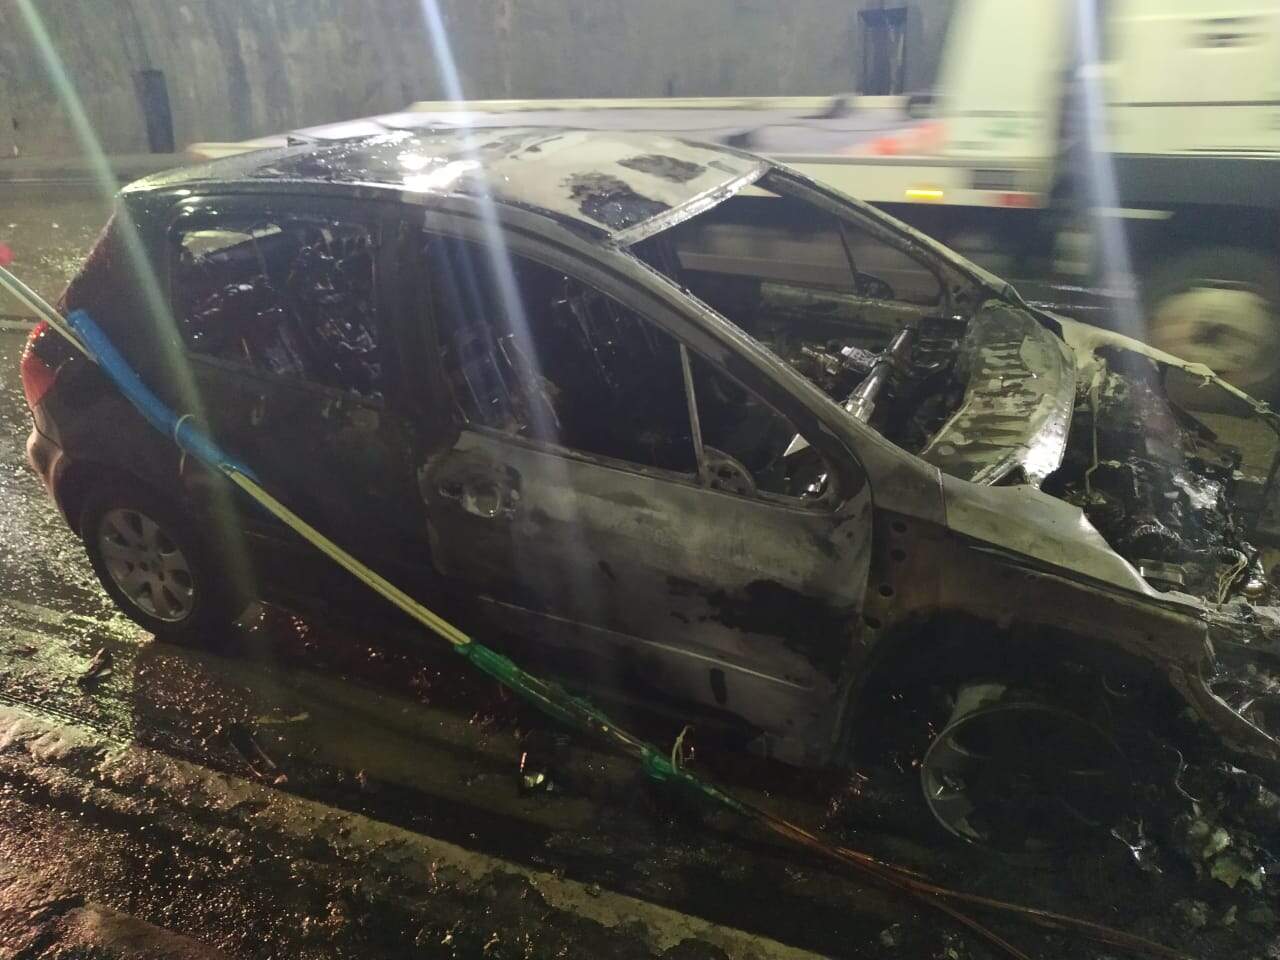  Veículo ficou destruído após incêndio dentro do túnel 